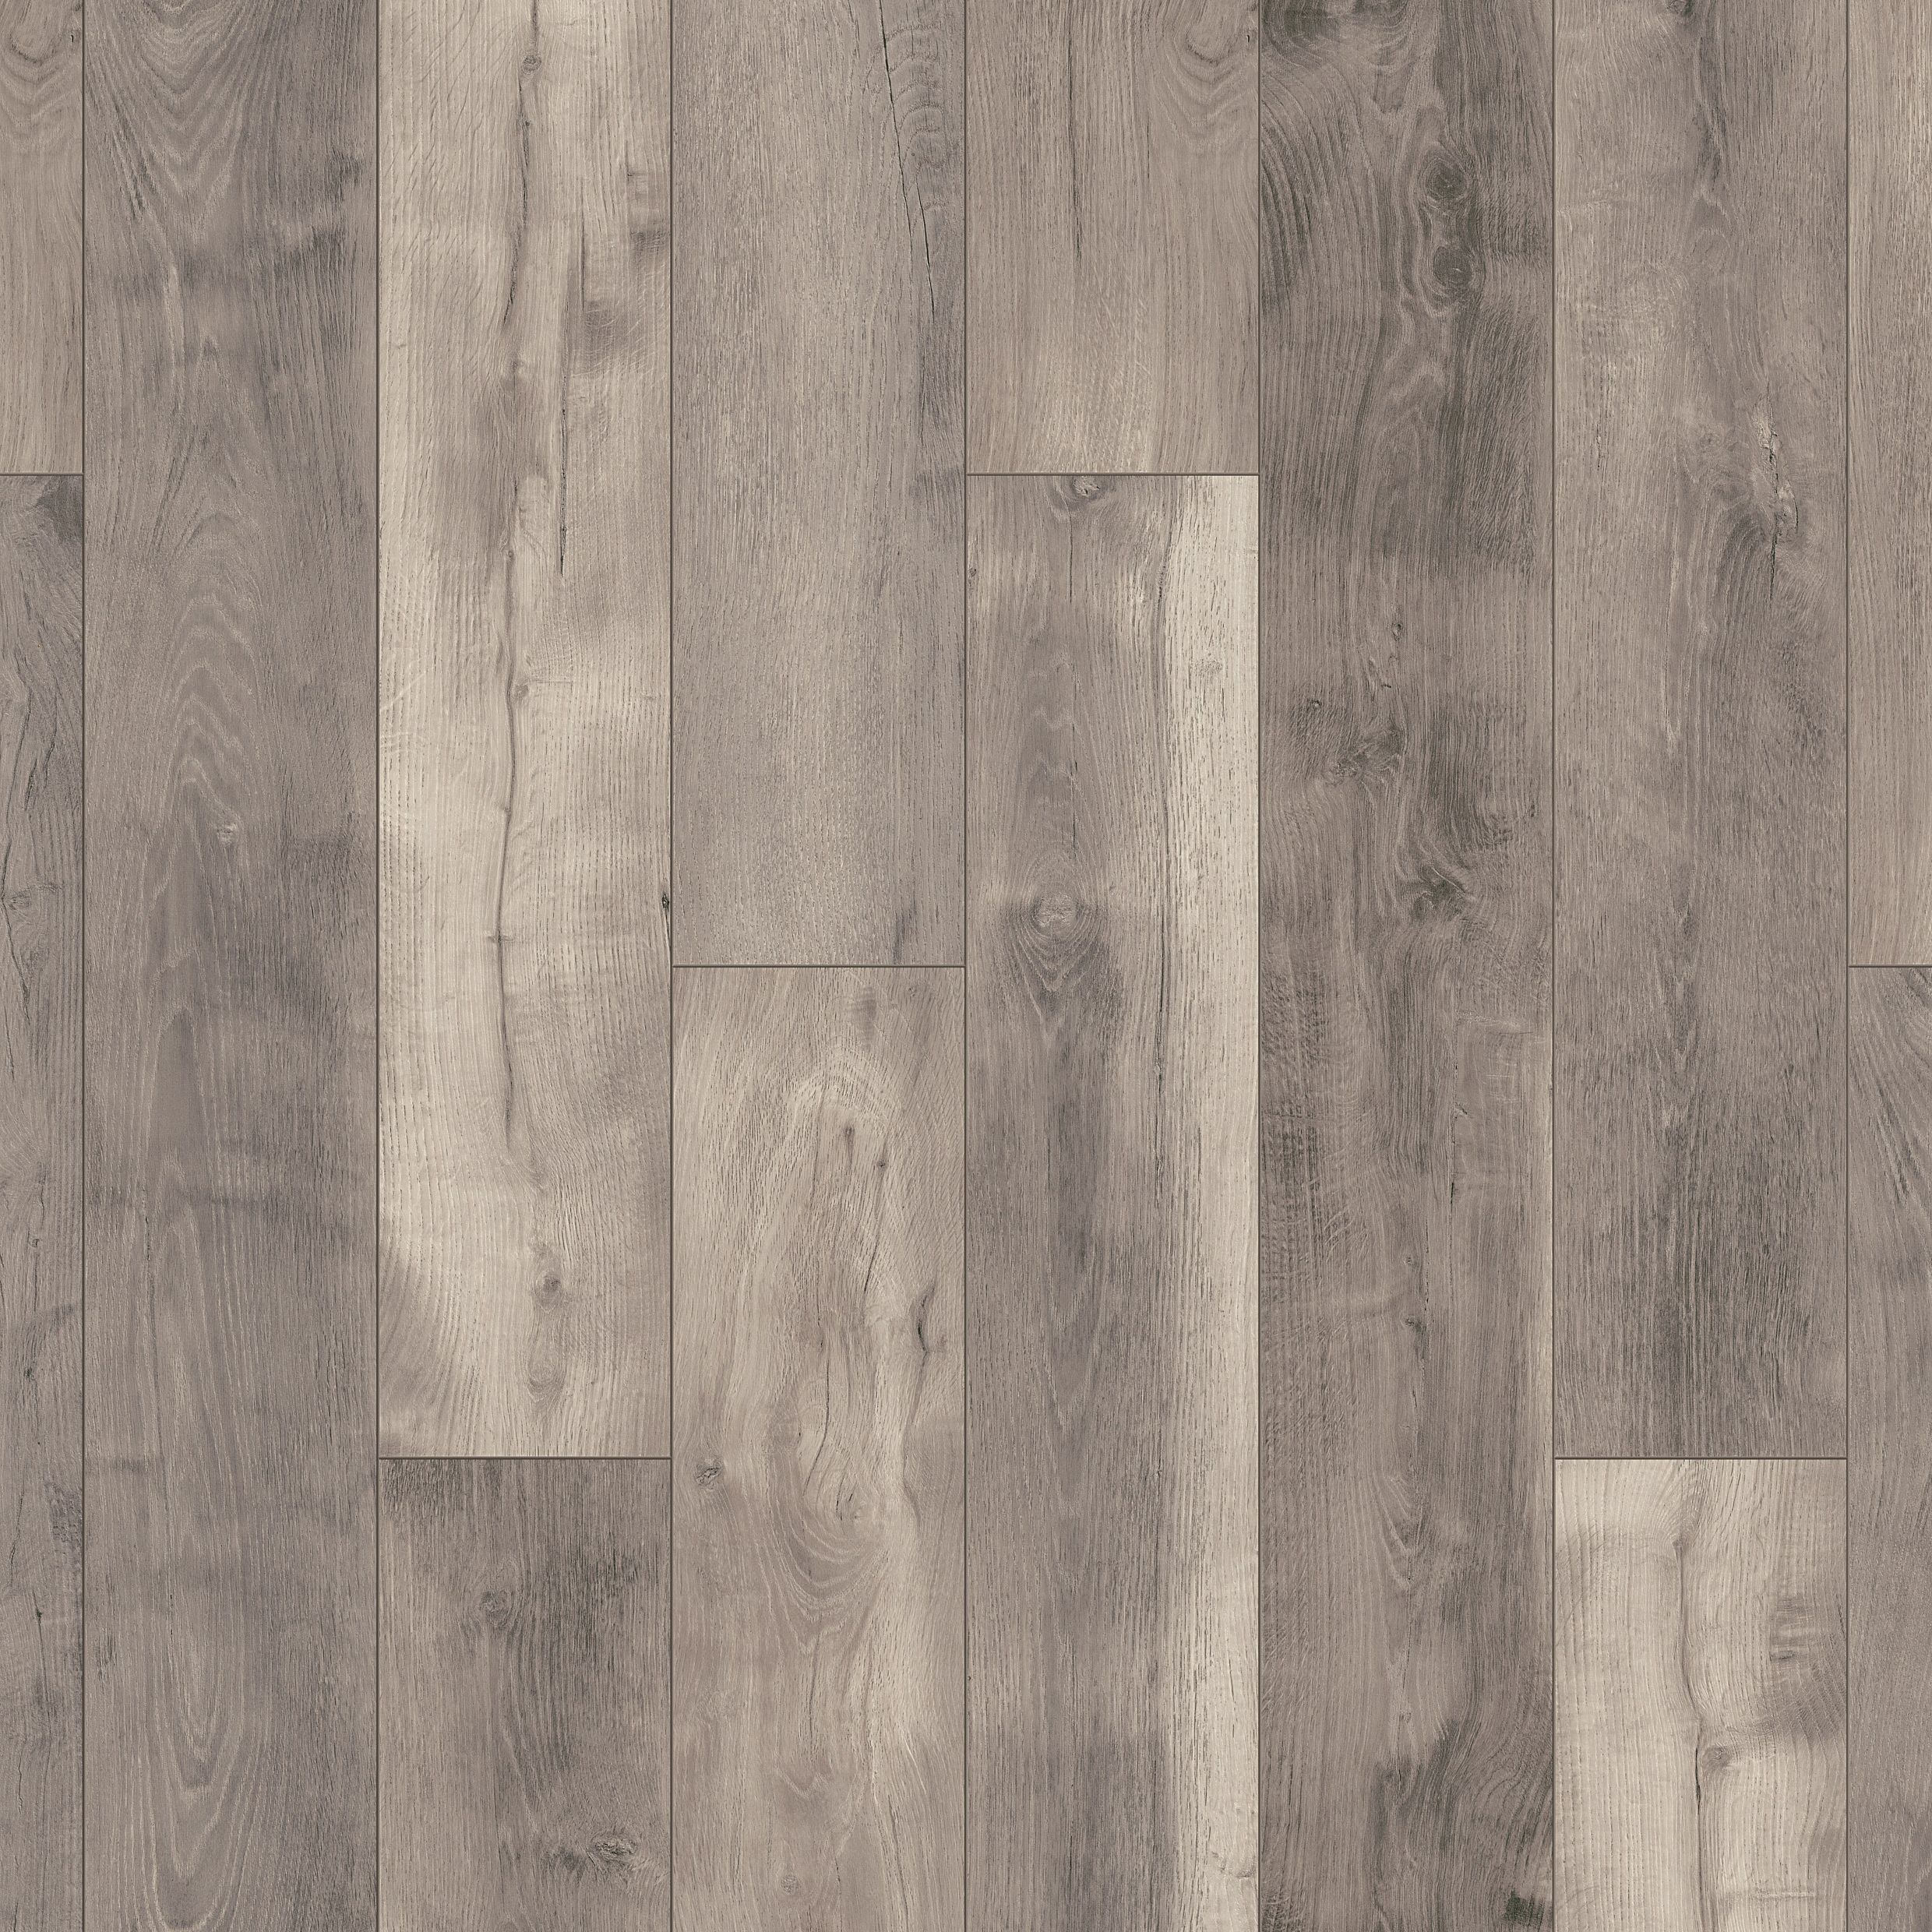 Image of BlackWater Grey Oak 10mm Laminate Flooring - 1.73m2